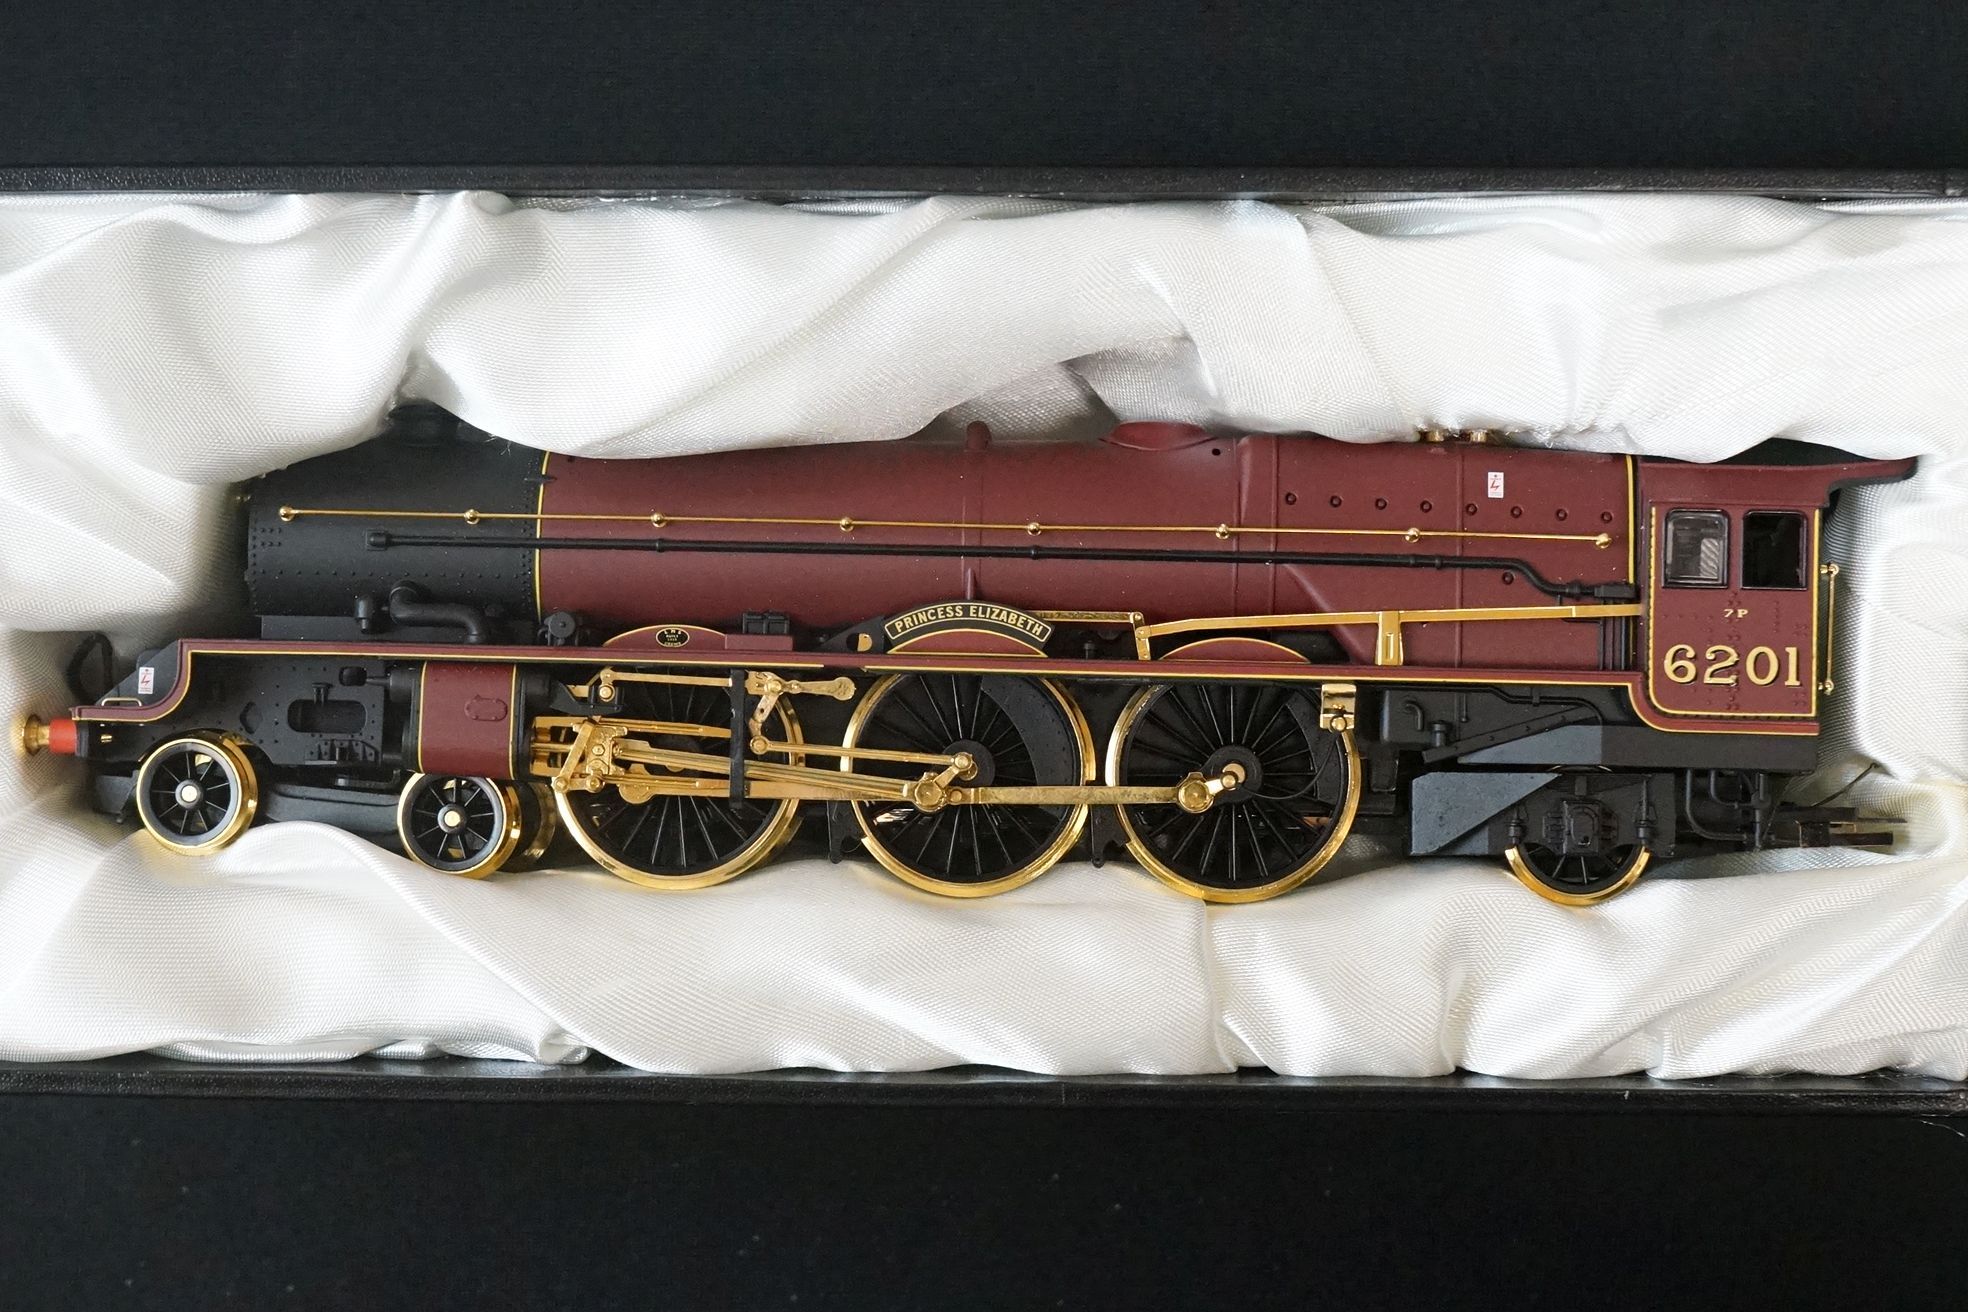 Boxed ltd edn Hornby OO gauge R2215 LMS 4-6-2 Princess Elizabeth Class Locomotive, 18 ct gold parts, - Image 3 of 7